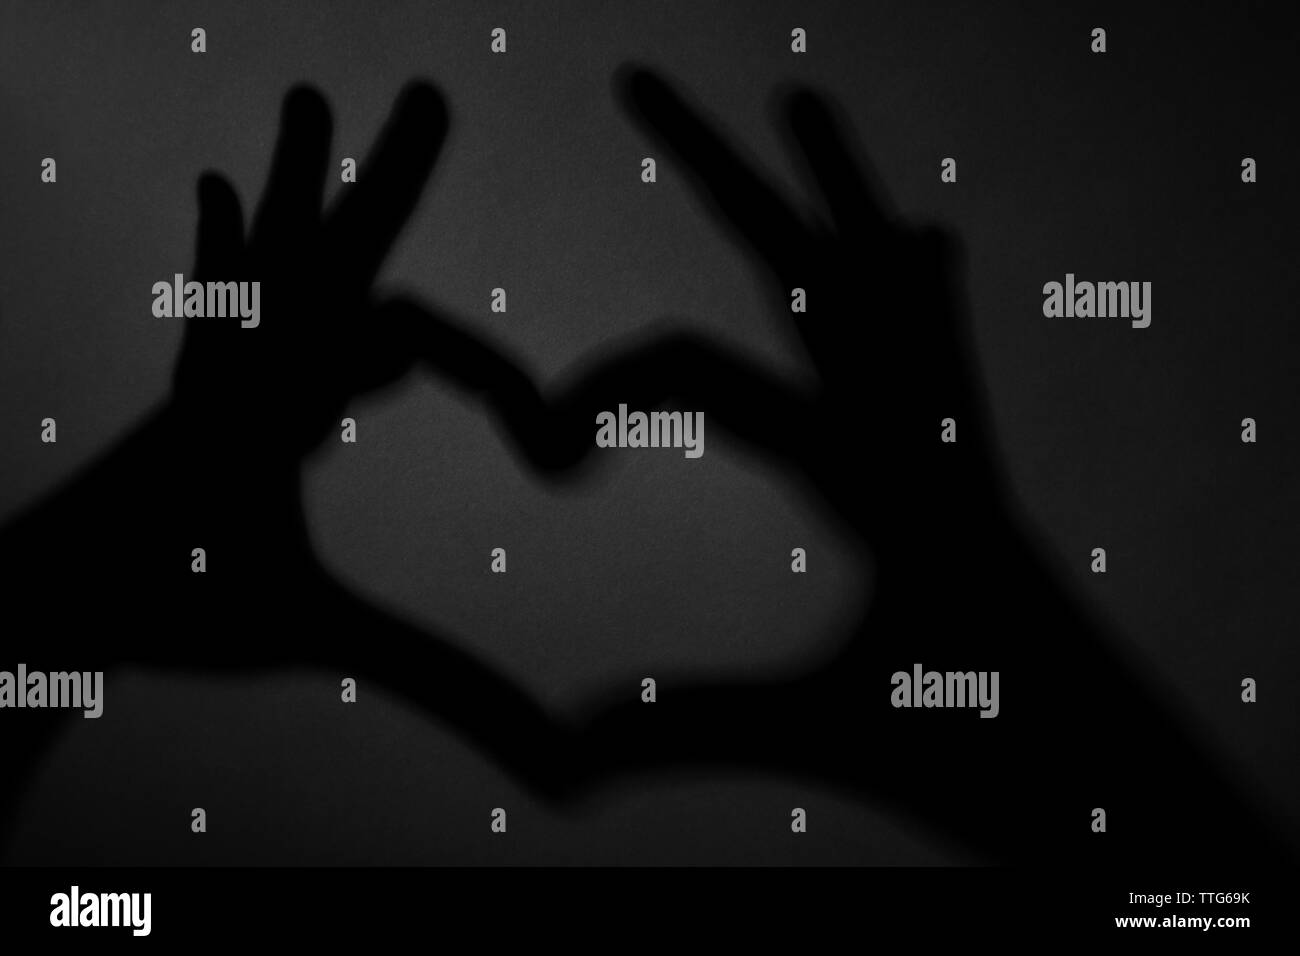 Hand shaped heart on dark background Stock Photo